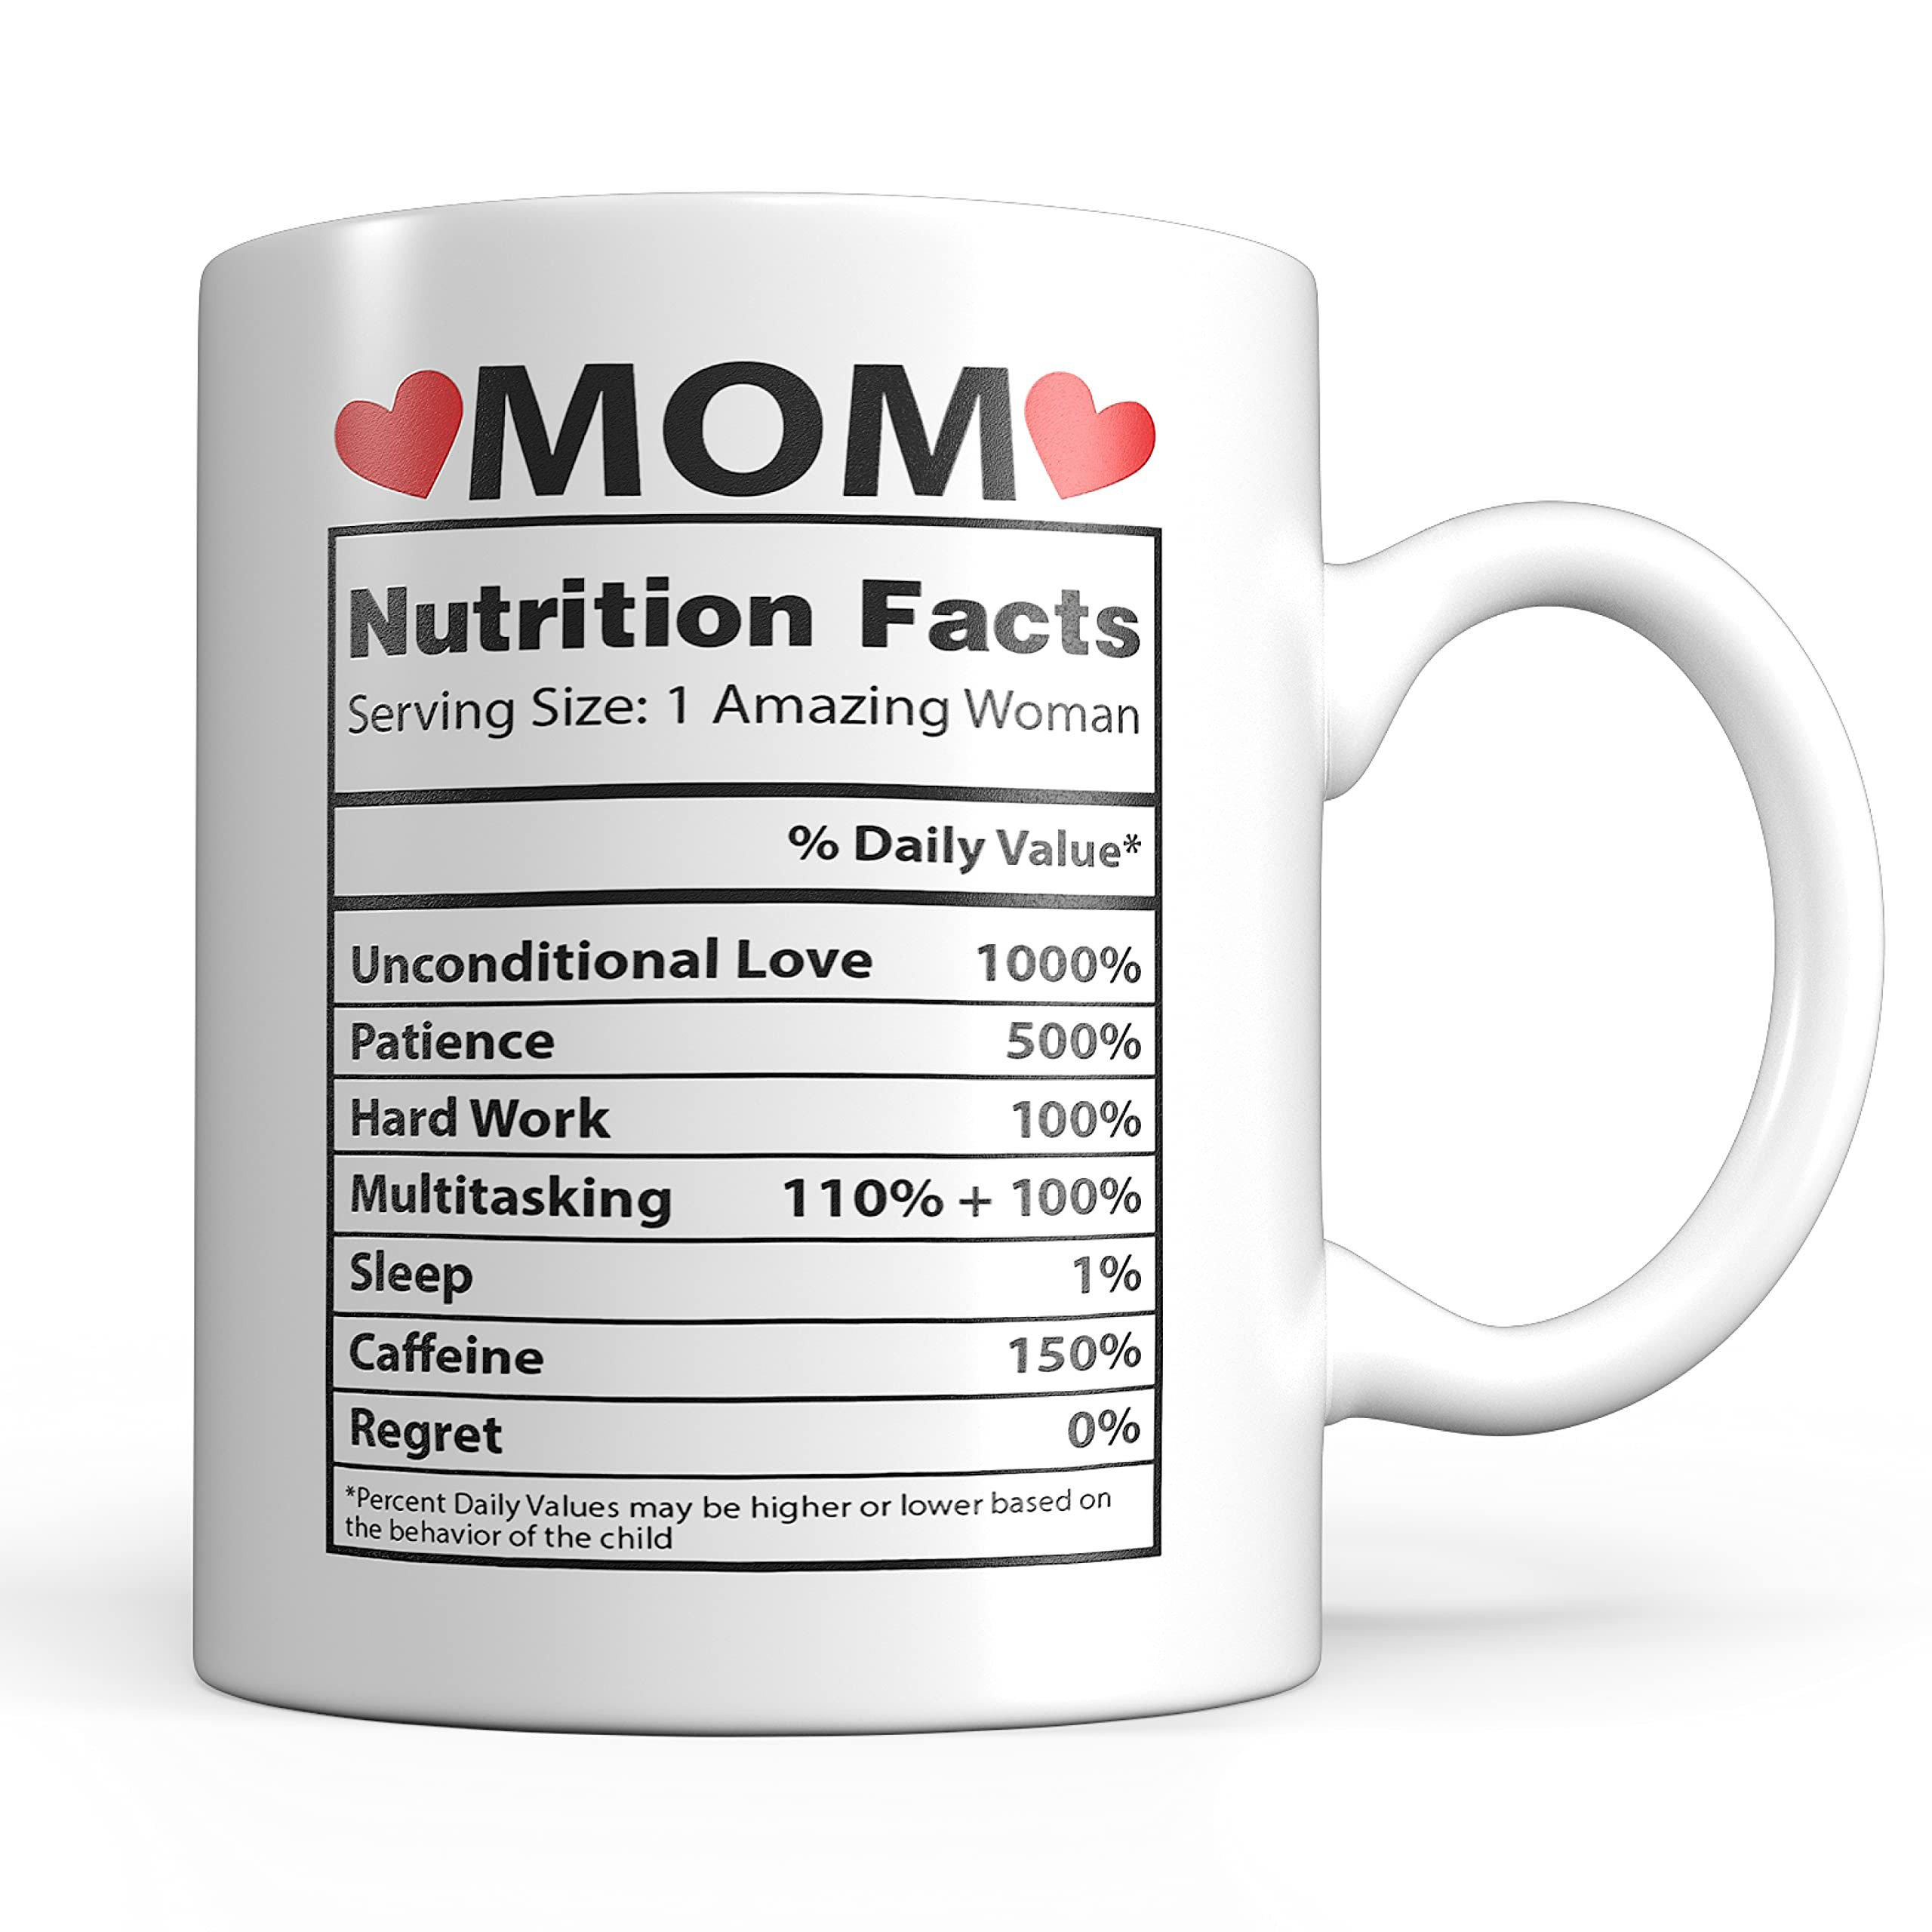 Oh Honey I Am That Mom Engraved Stainless Steel Mom Tumbler, Twin Mom Mug, Funny  Mom Gift Mug, Travel Tumbler Mug for Moms 